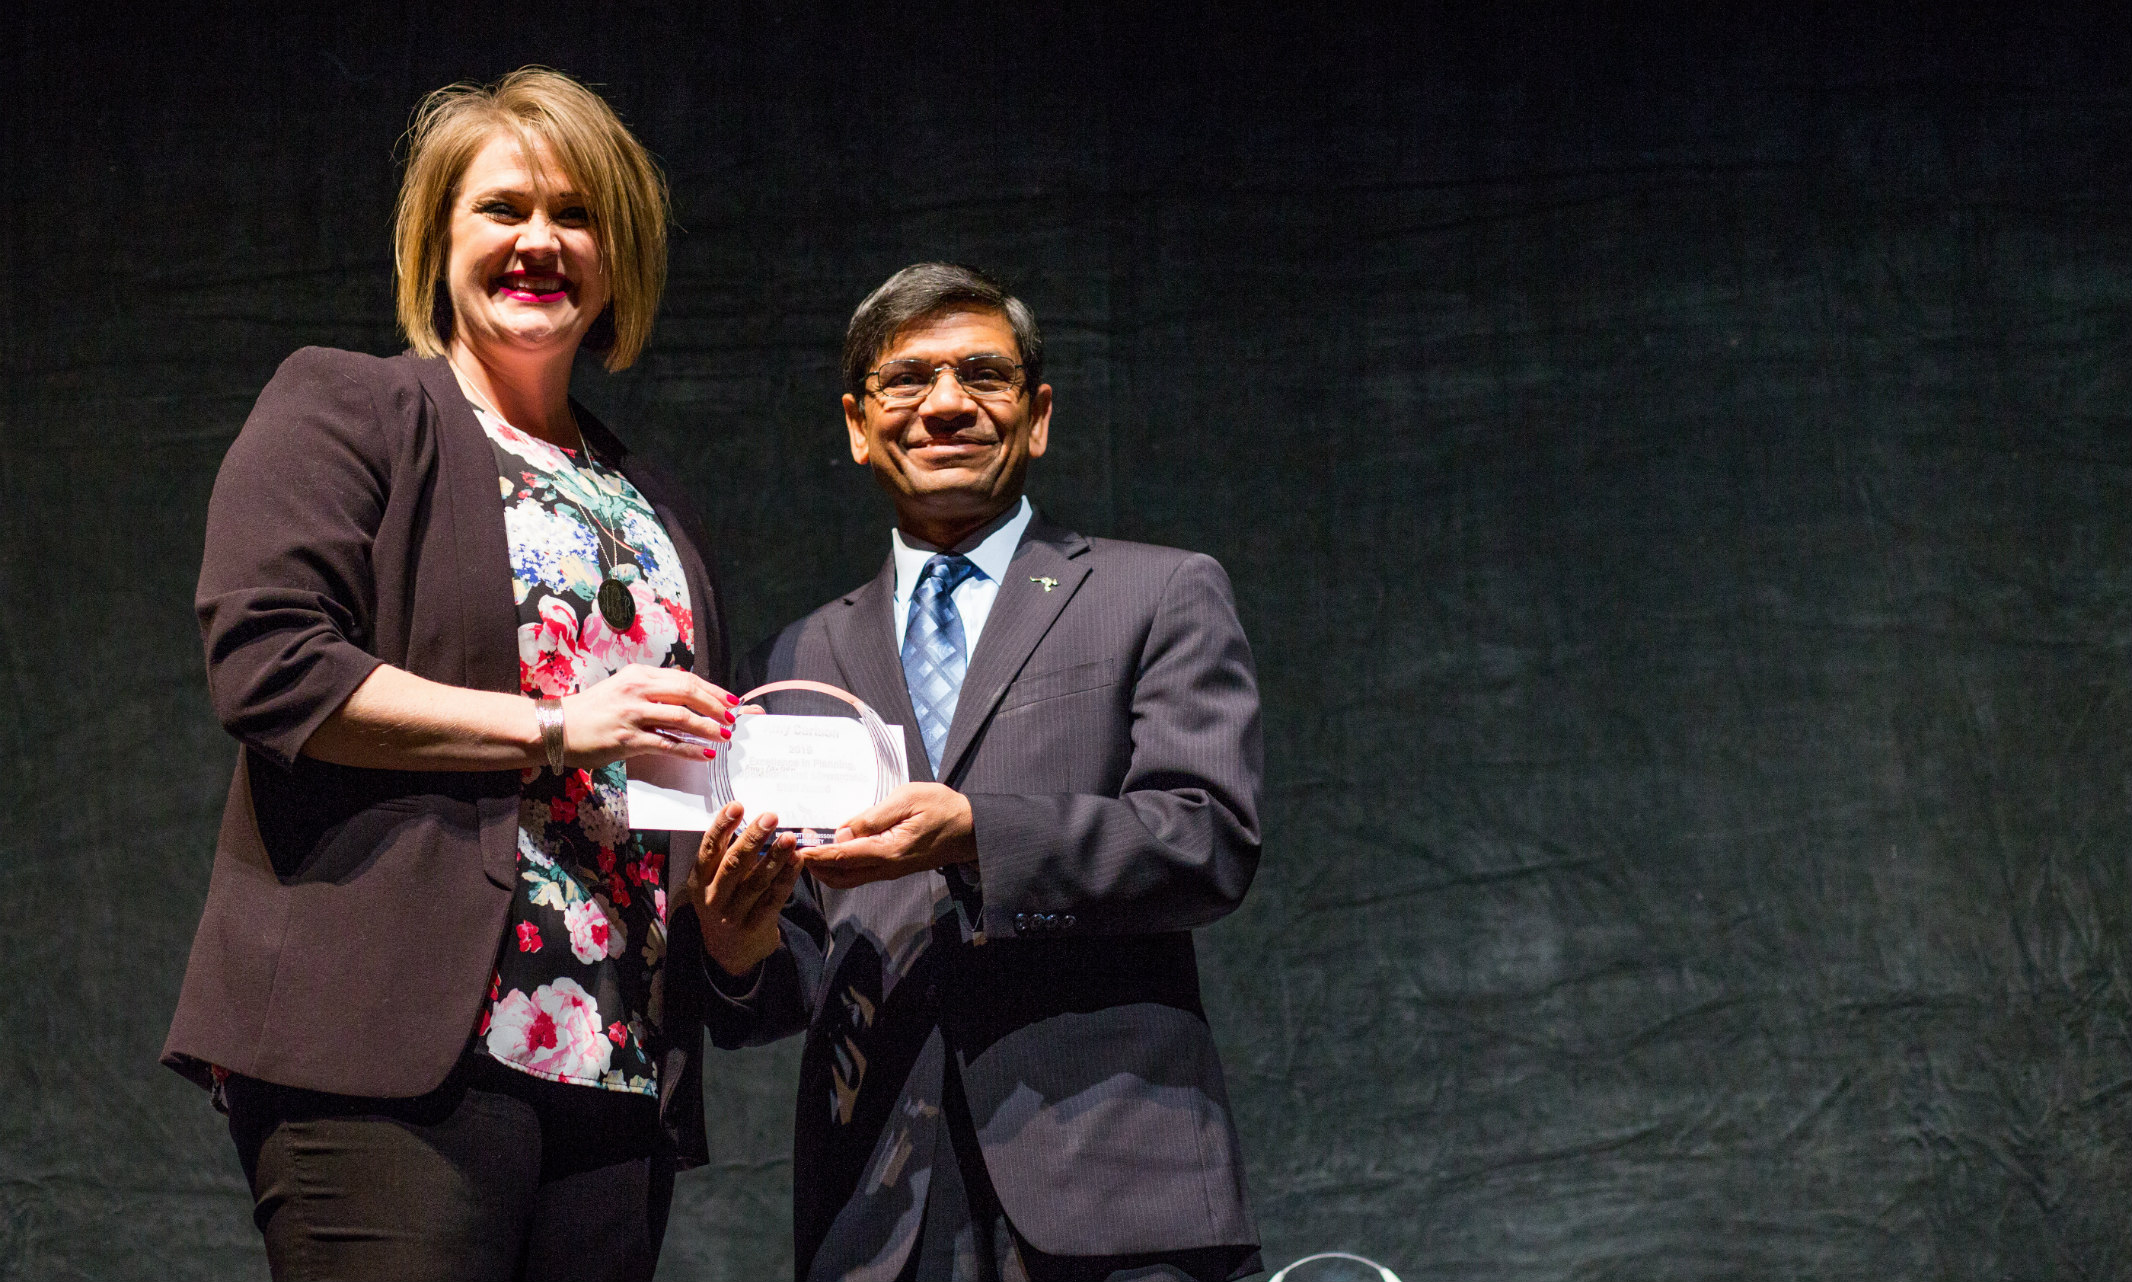 Staff award recipient receives award from Chancellor Mauli Agrawal